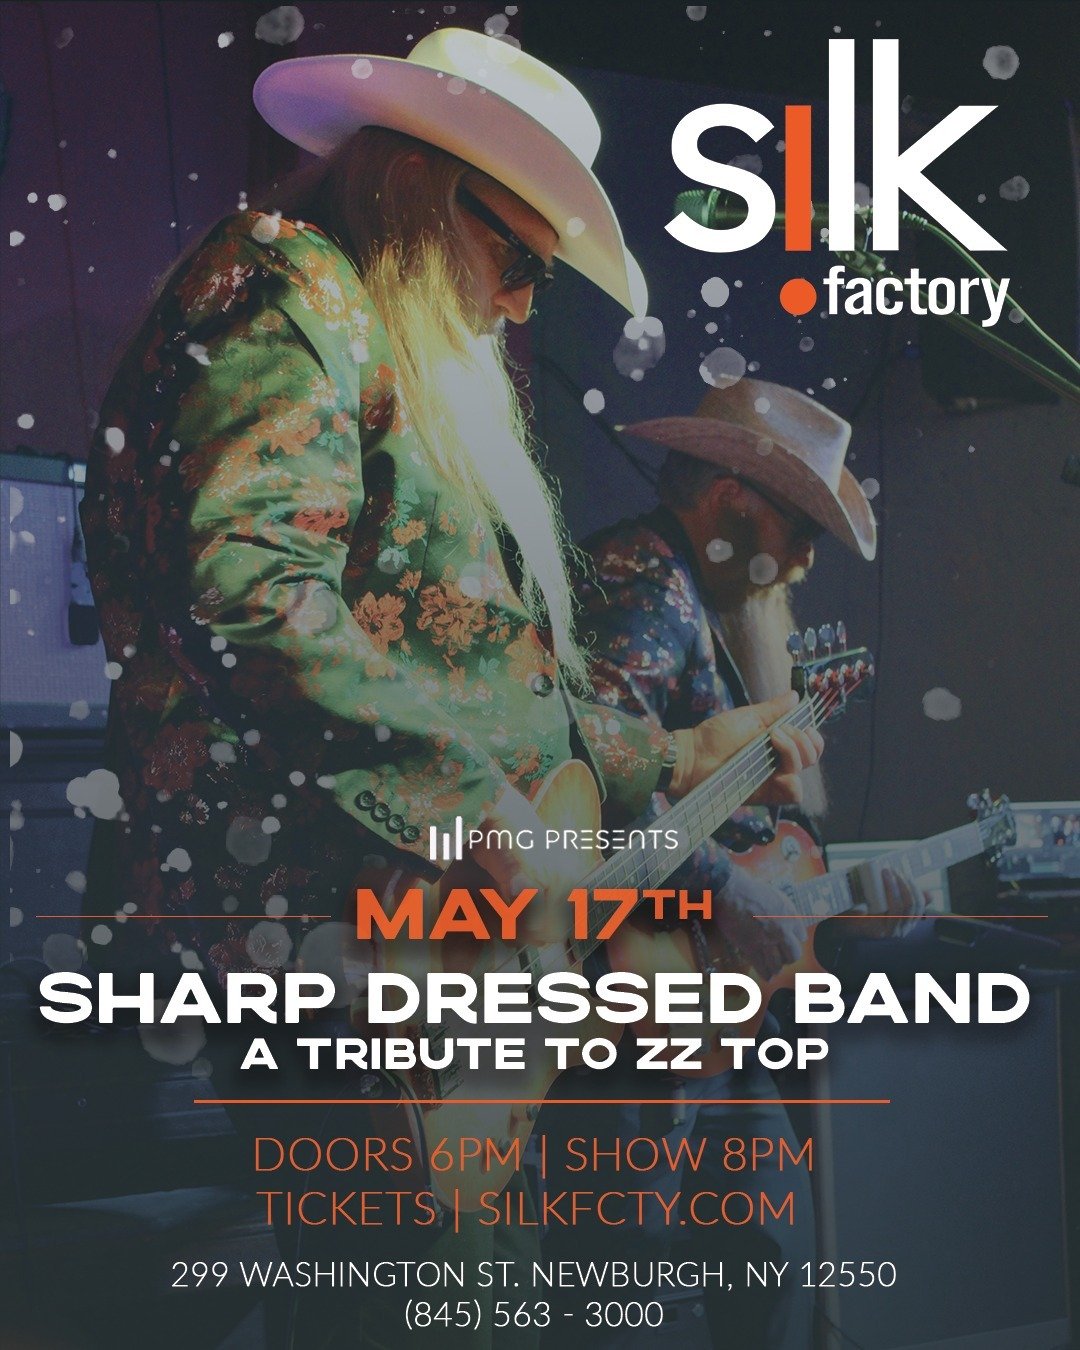 Sharp Dressed Band @sharpdressedband1 
Silk Factory @silkfcty

Friday, May 17th | silkfcty.com